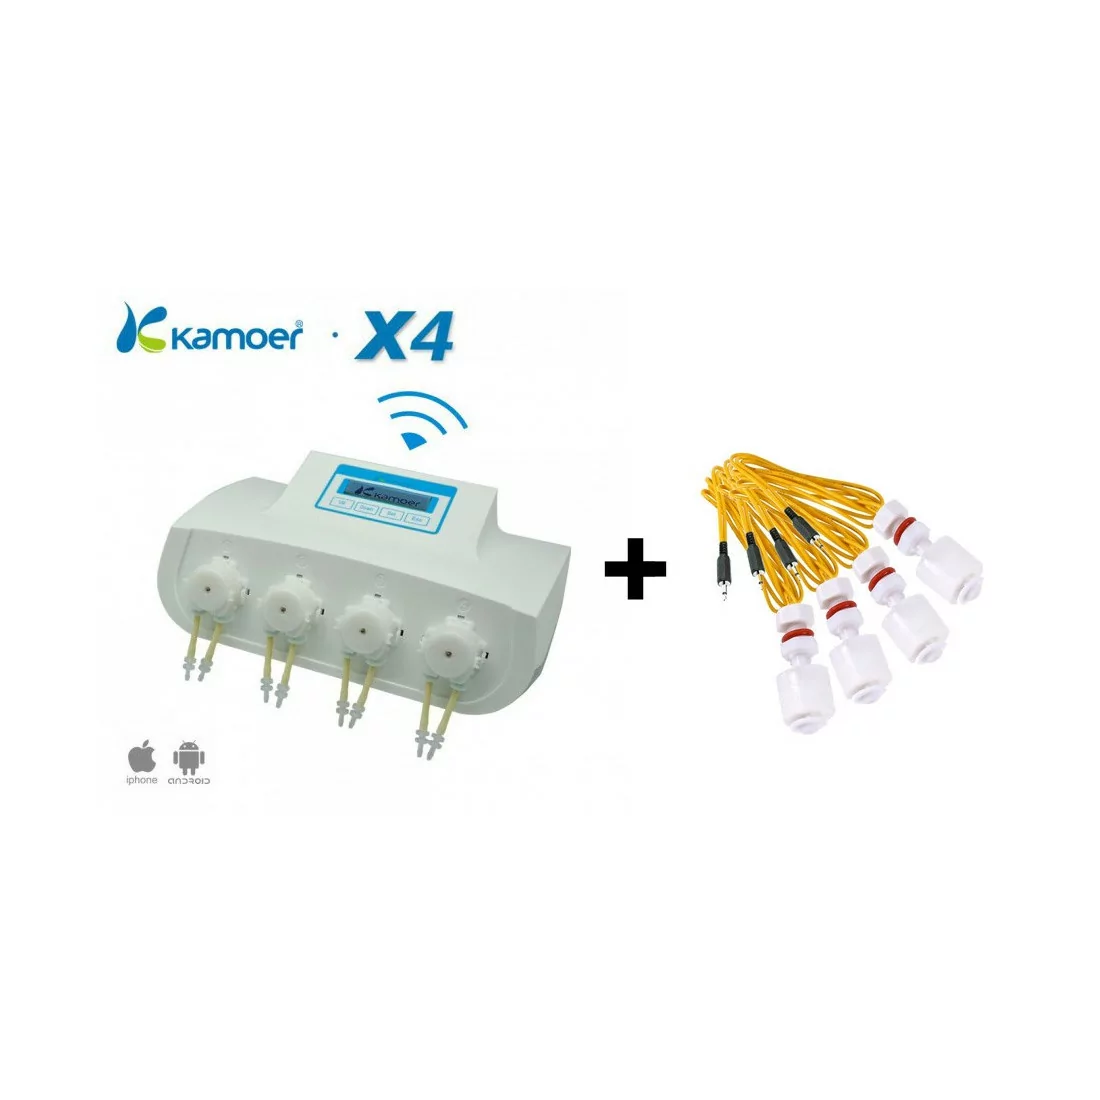 Pompe doseuse Kamoer X4 + 4 capteurs